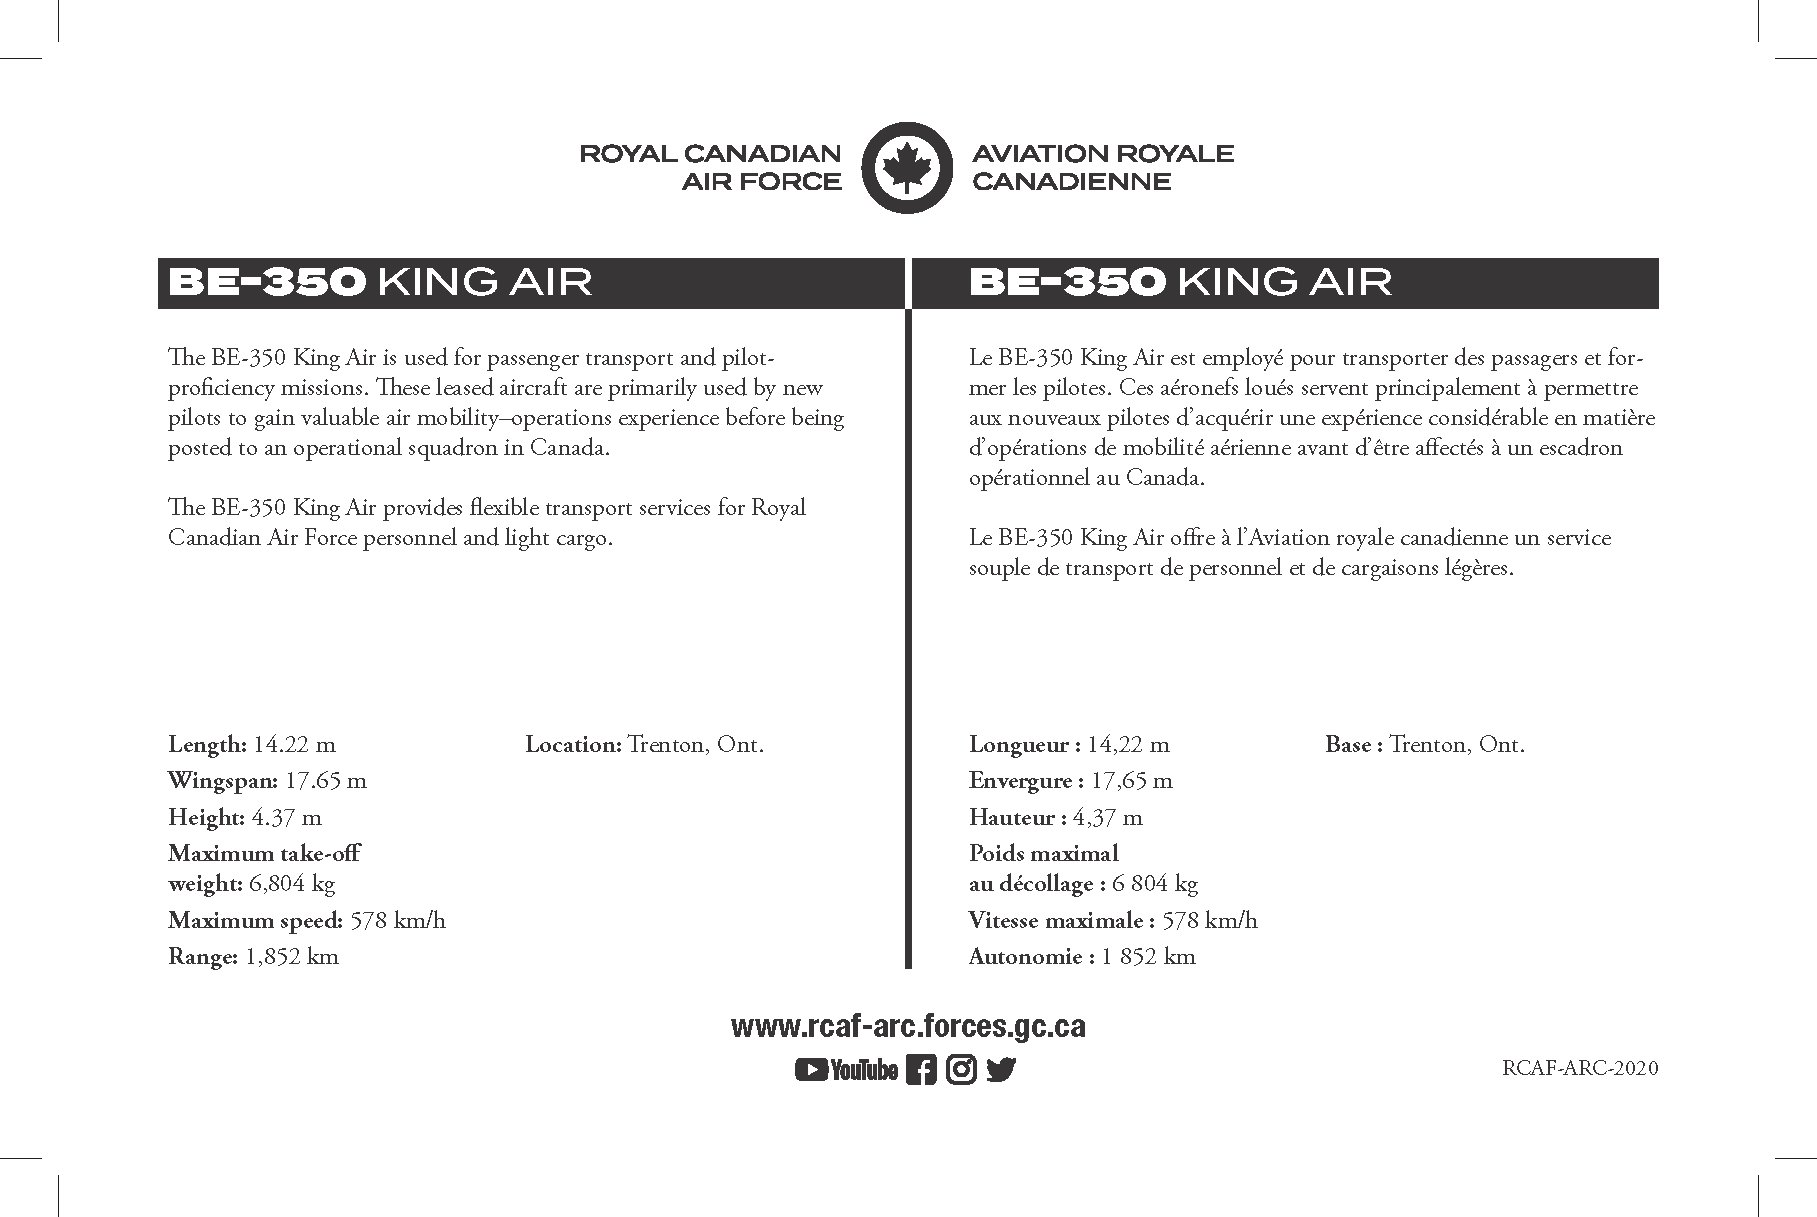 BE-350 King Air fact sheet details